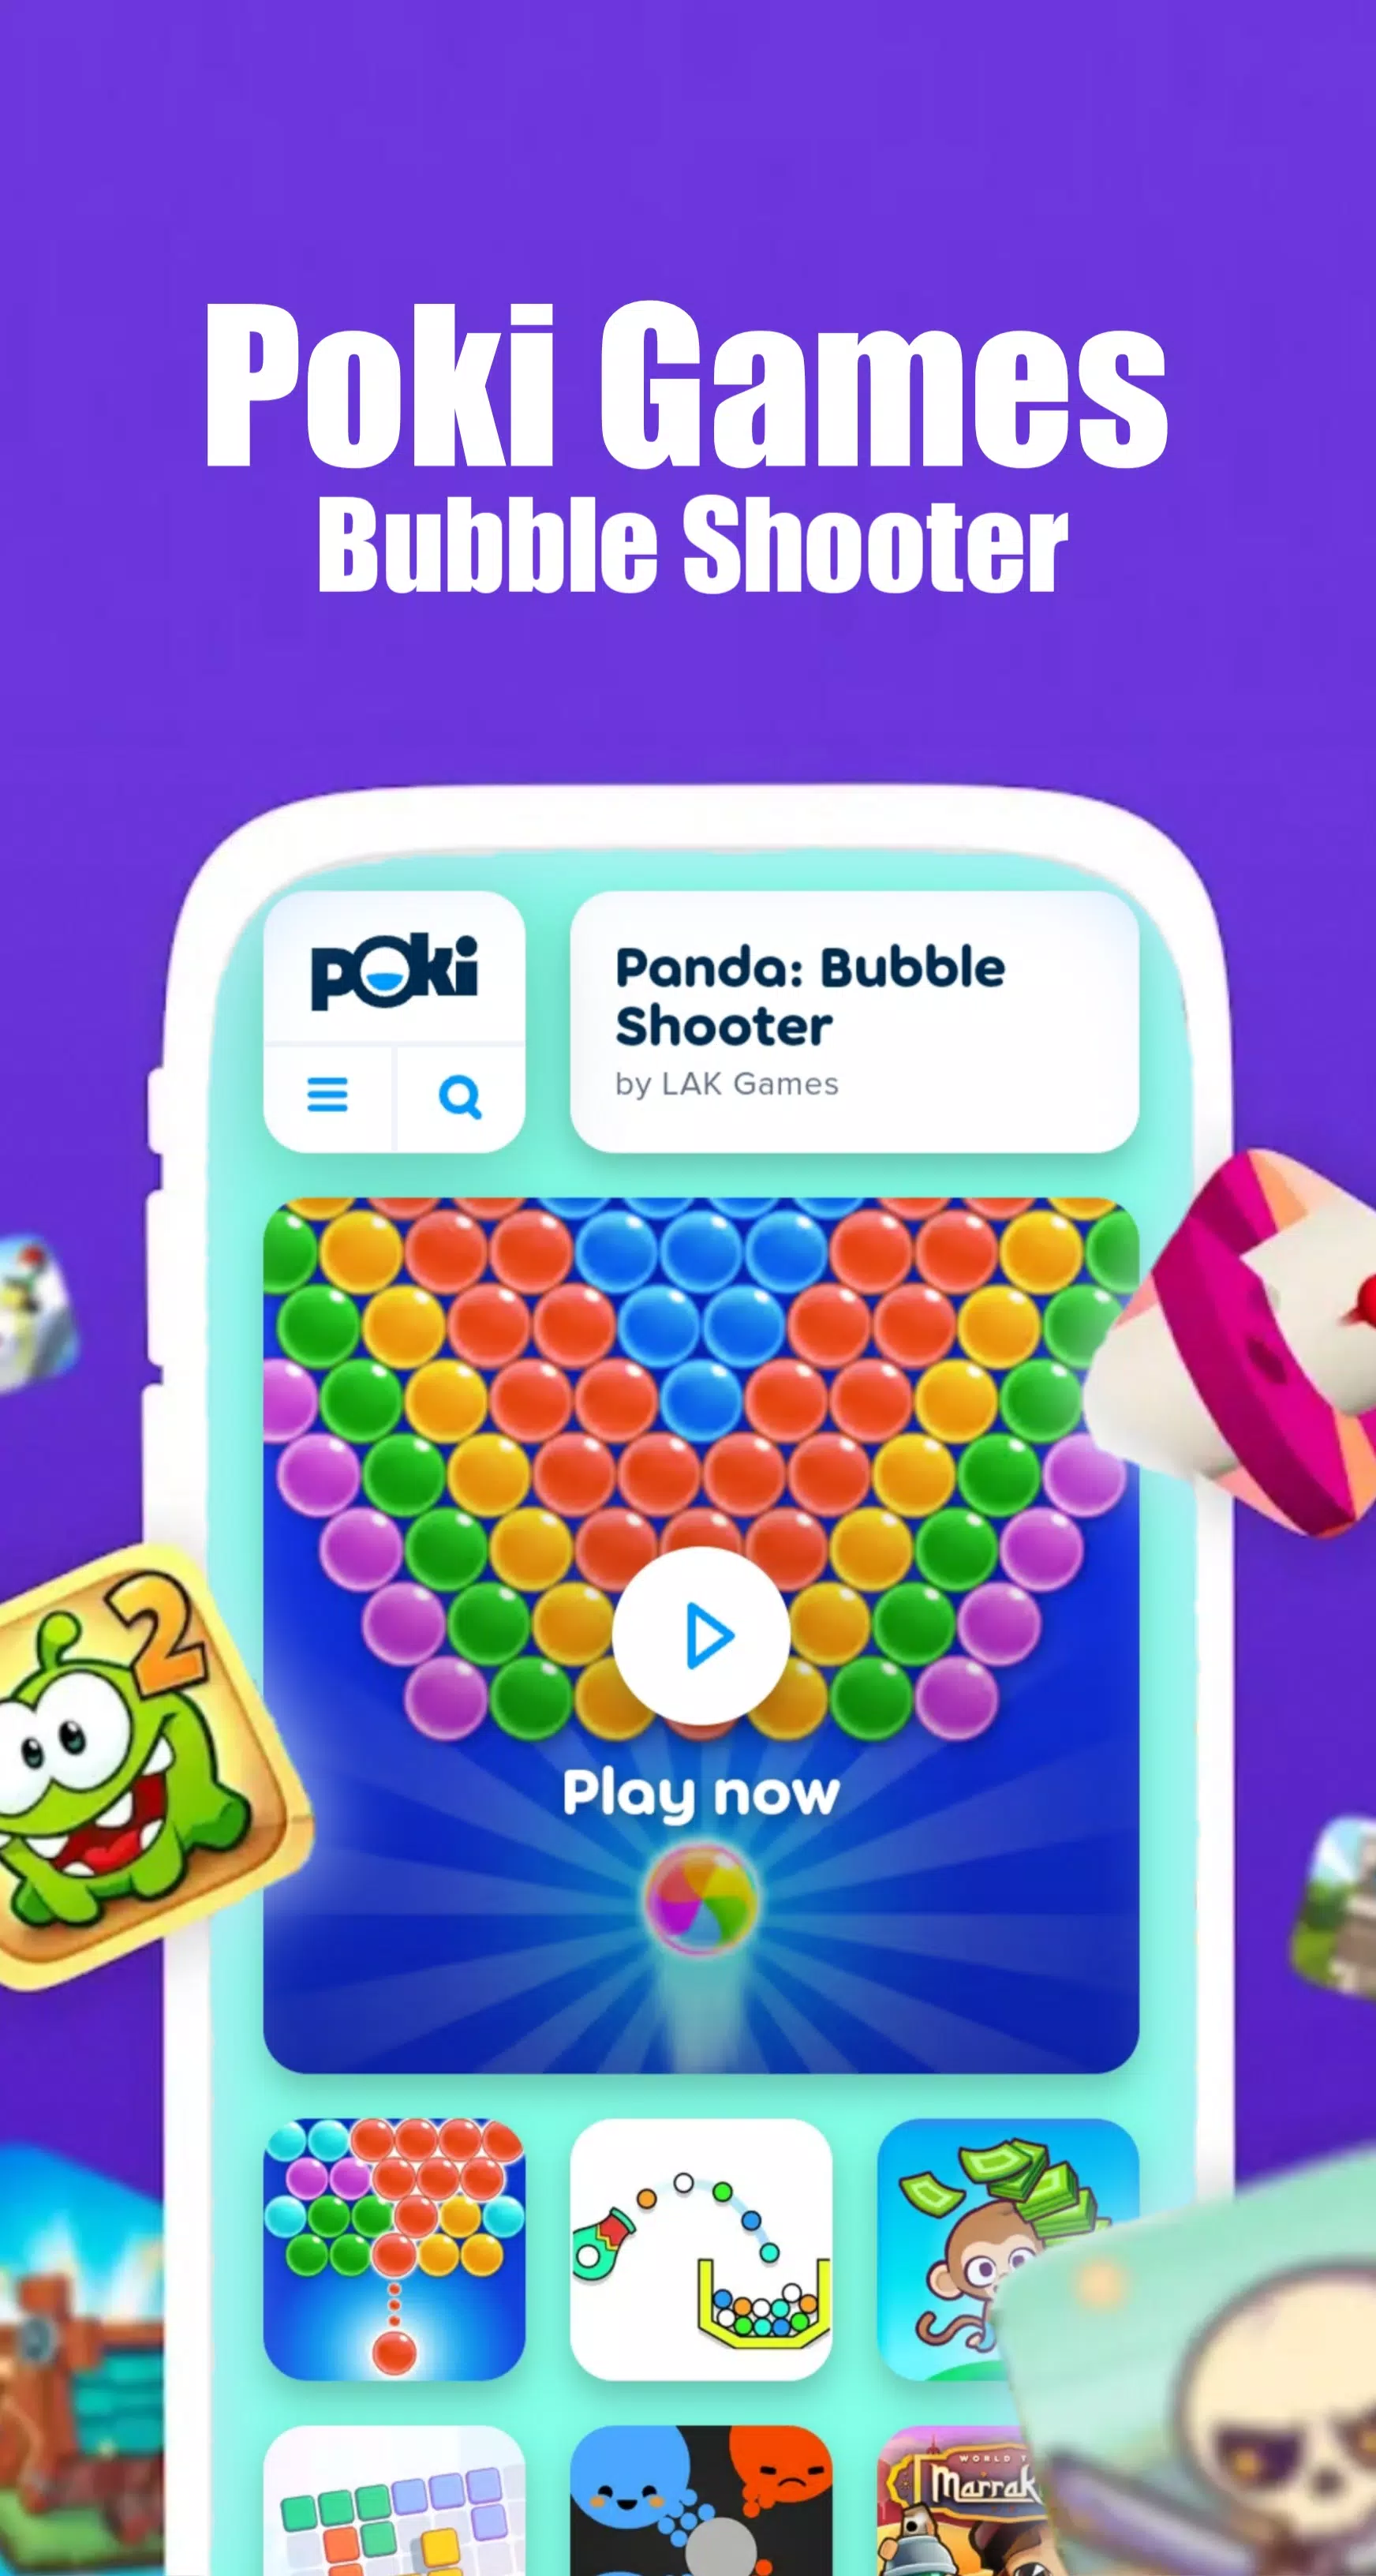 Games Poki.io APK for Android Download